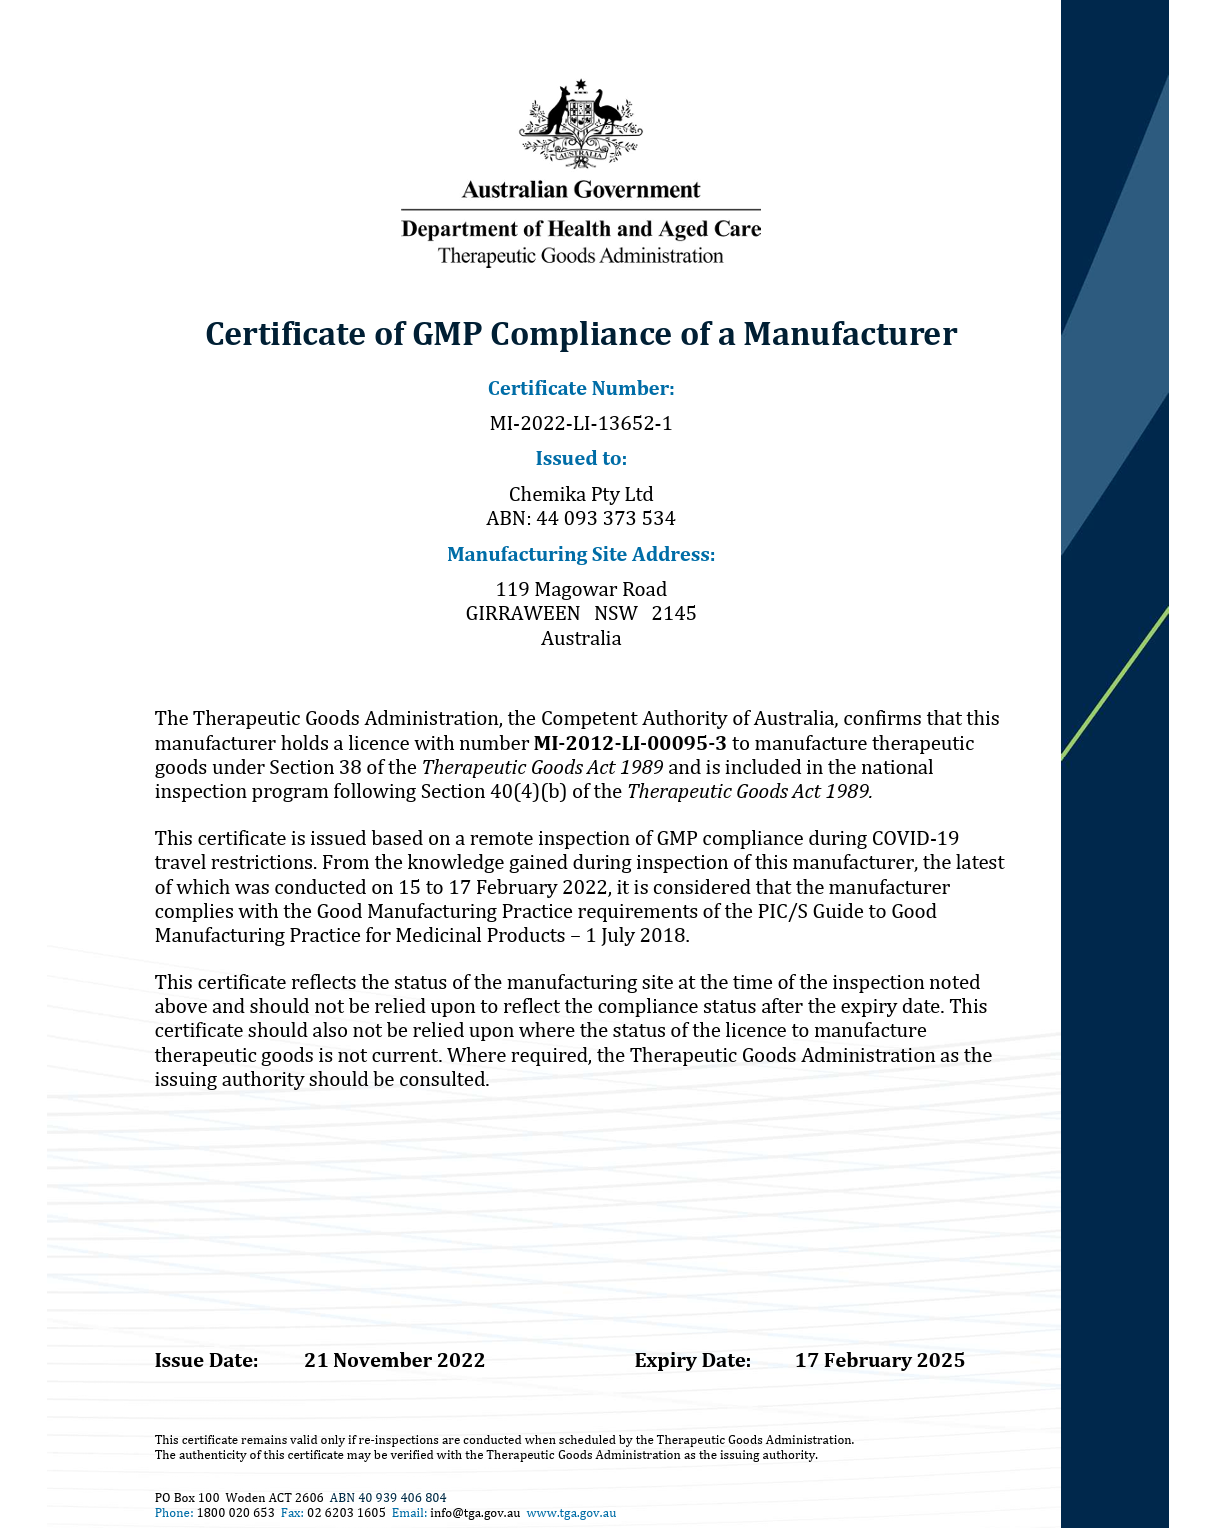 eu certificate of gmp compliance, tga certificate of gmp compliance, gmp certificate of compliance, health canada gmp certificate of compliance, swissmedic certificate of gmp compliance